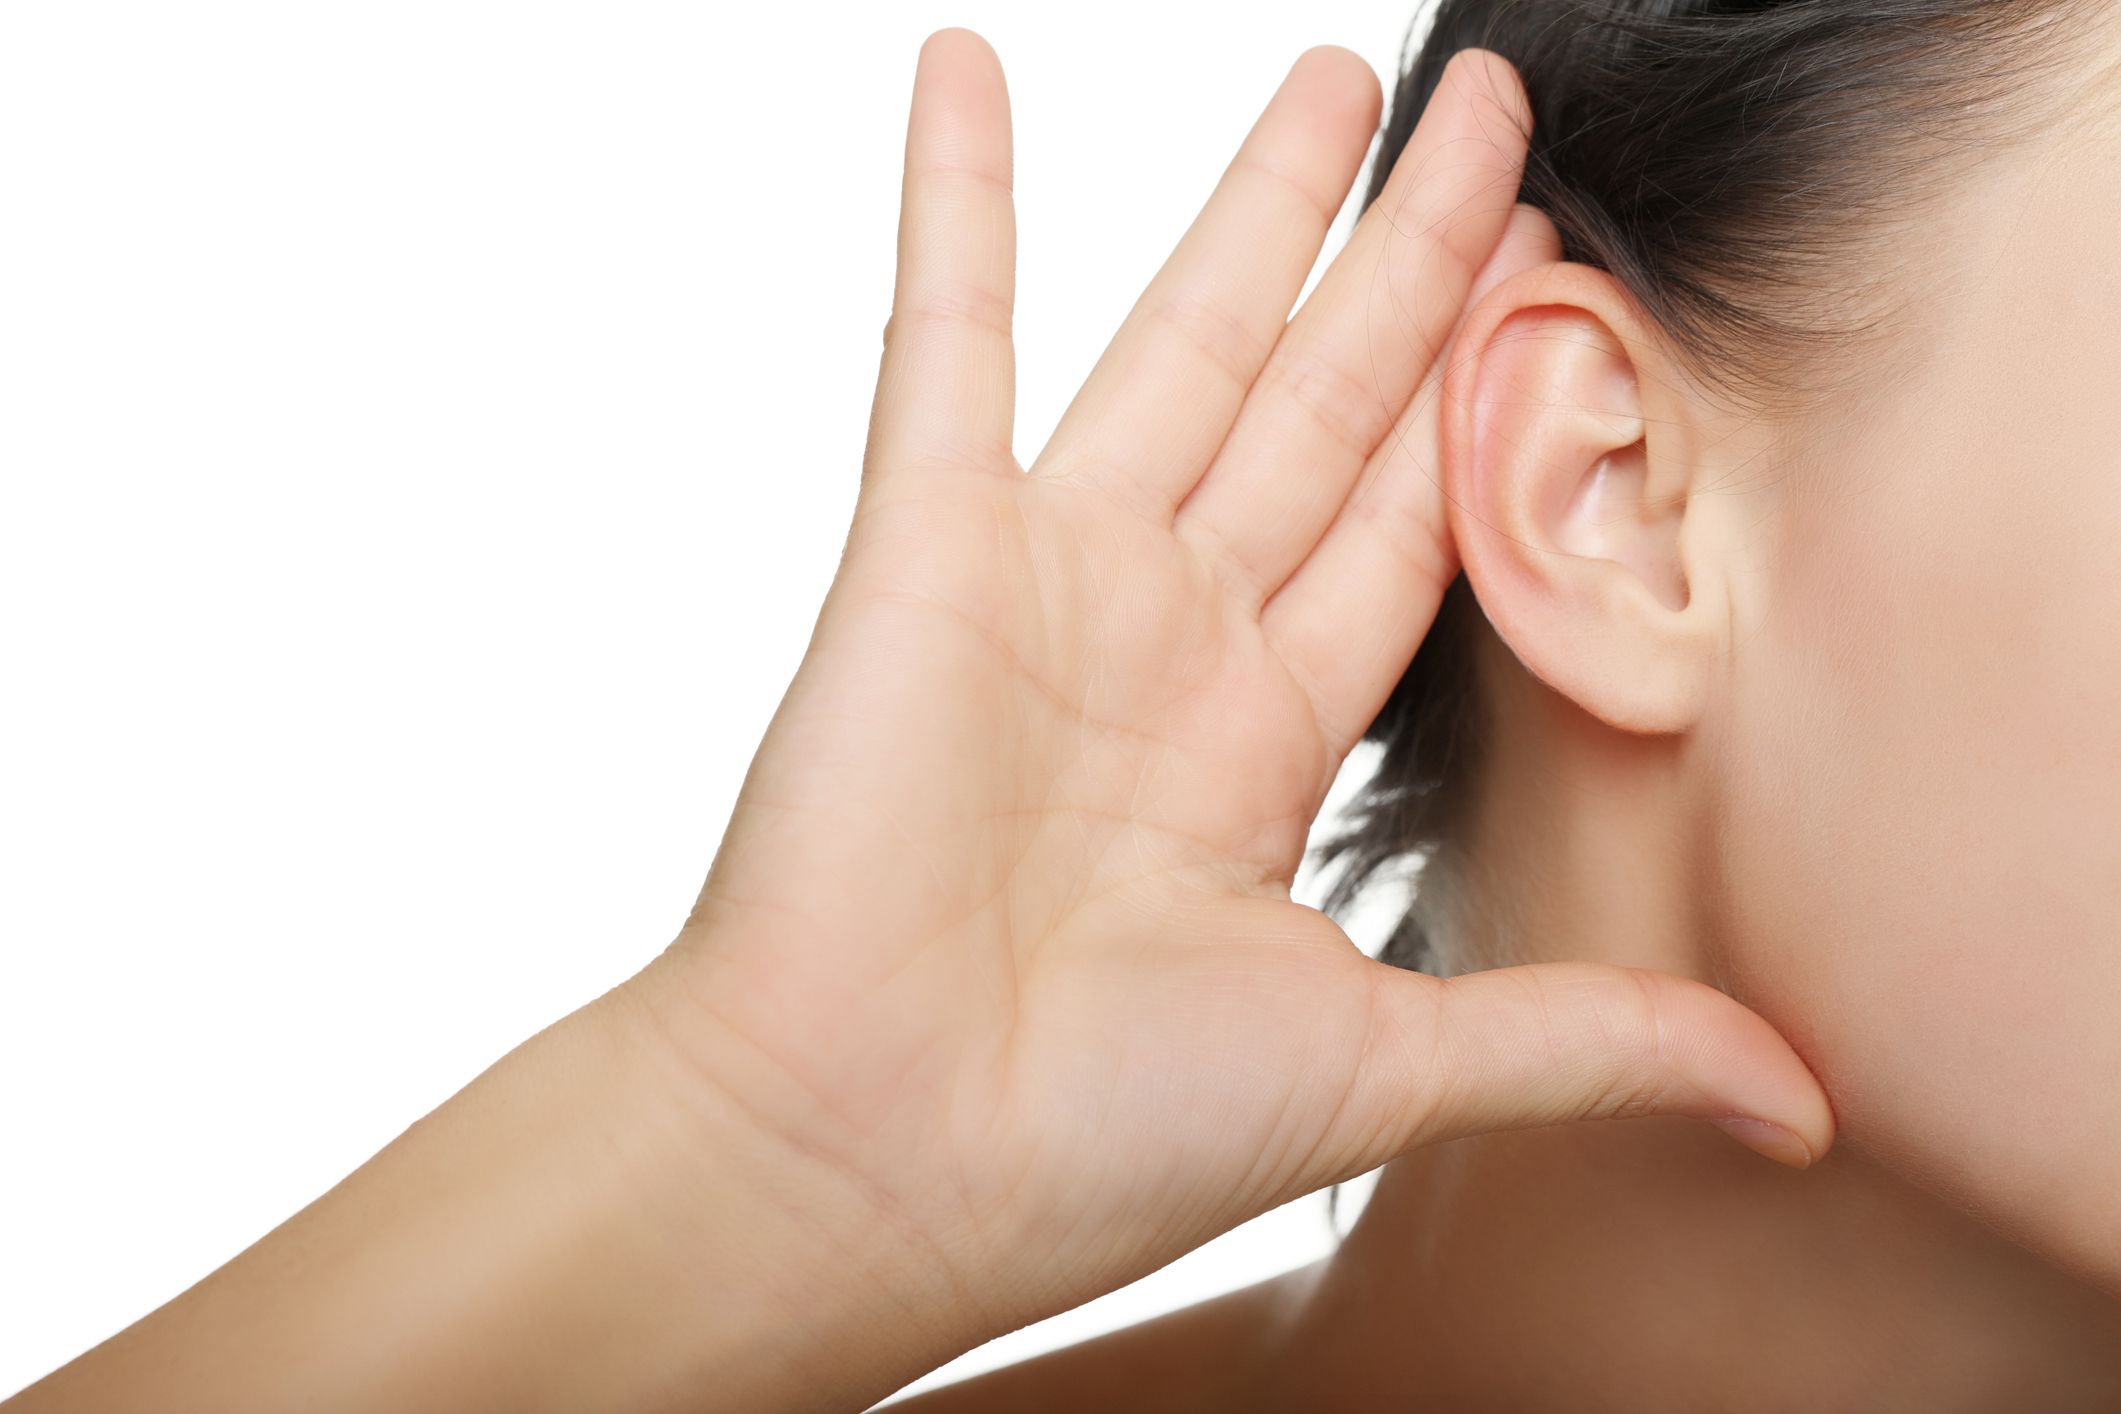 Ear hearing. Ears картинка. Картина ухо. Earache картинка для детей. Умение слушать картинки.